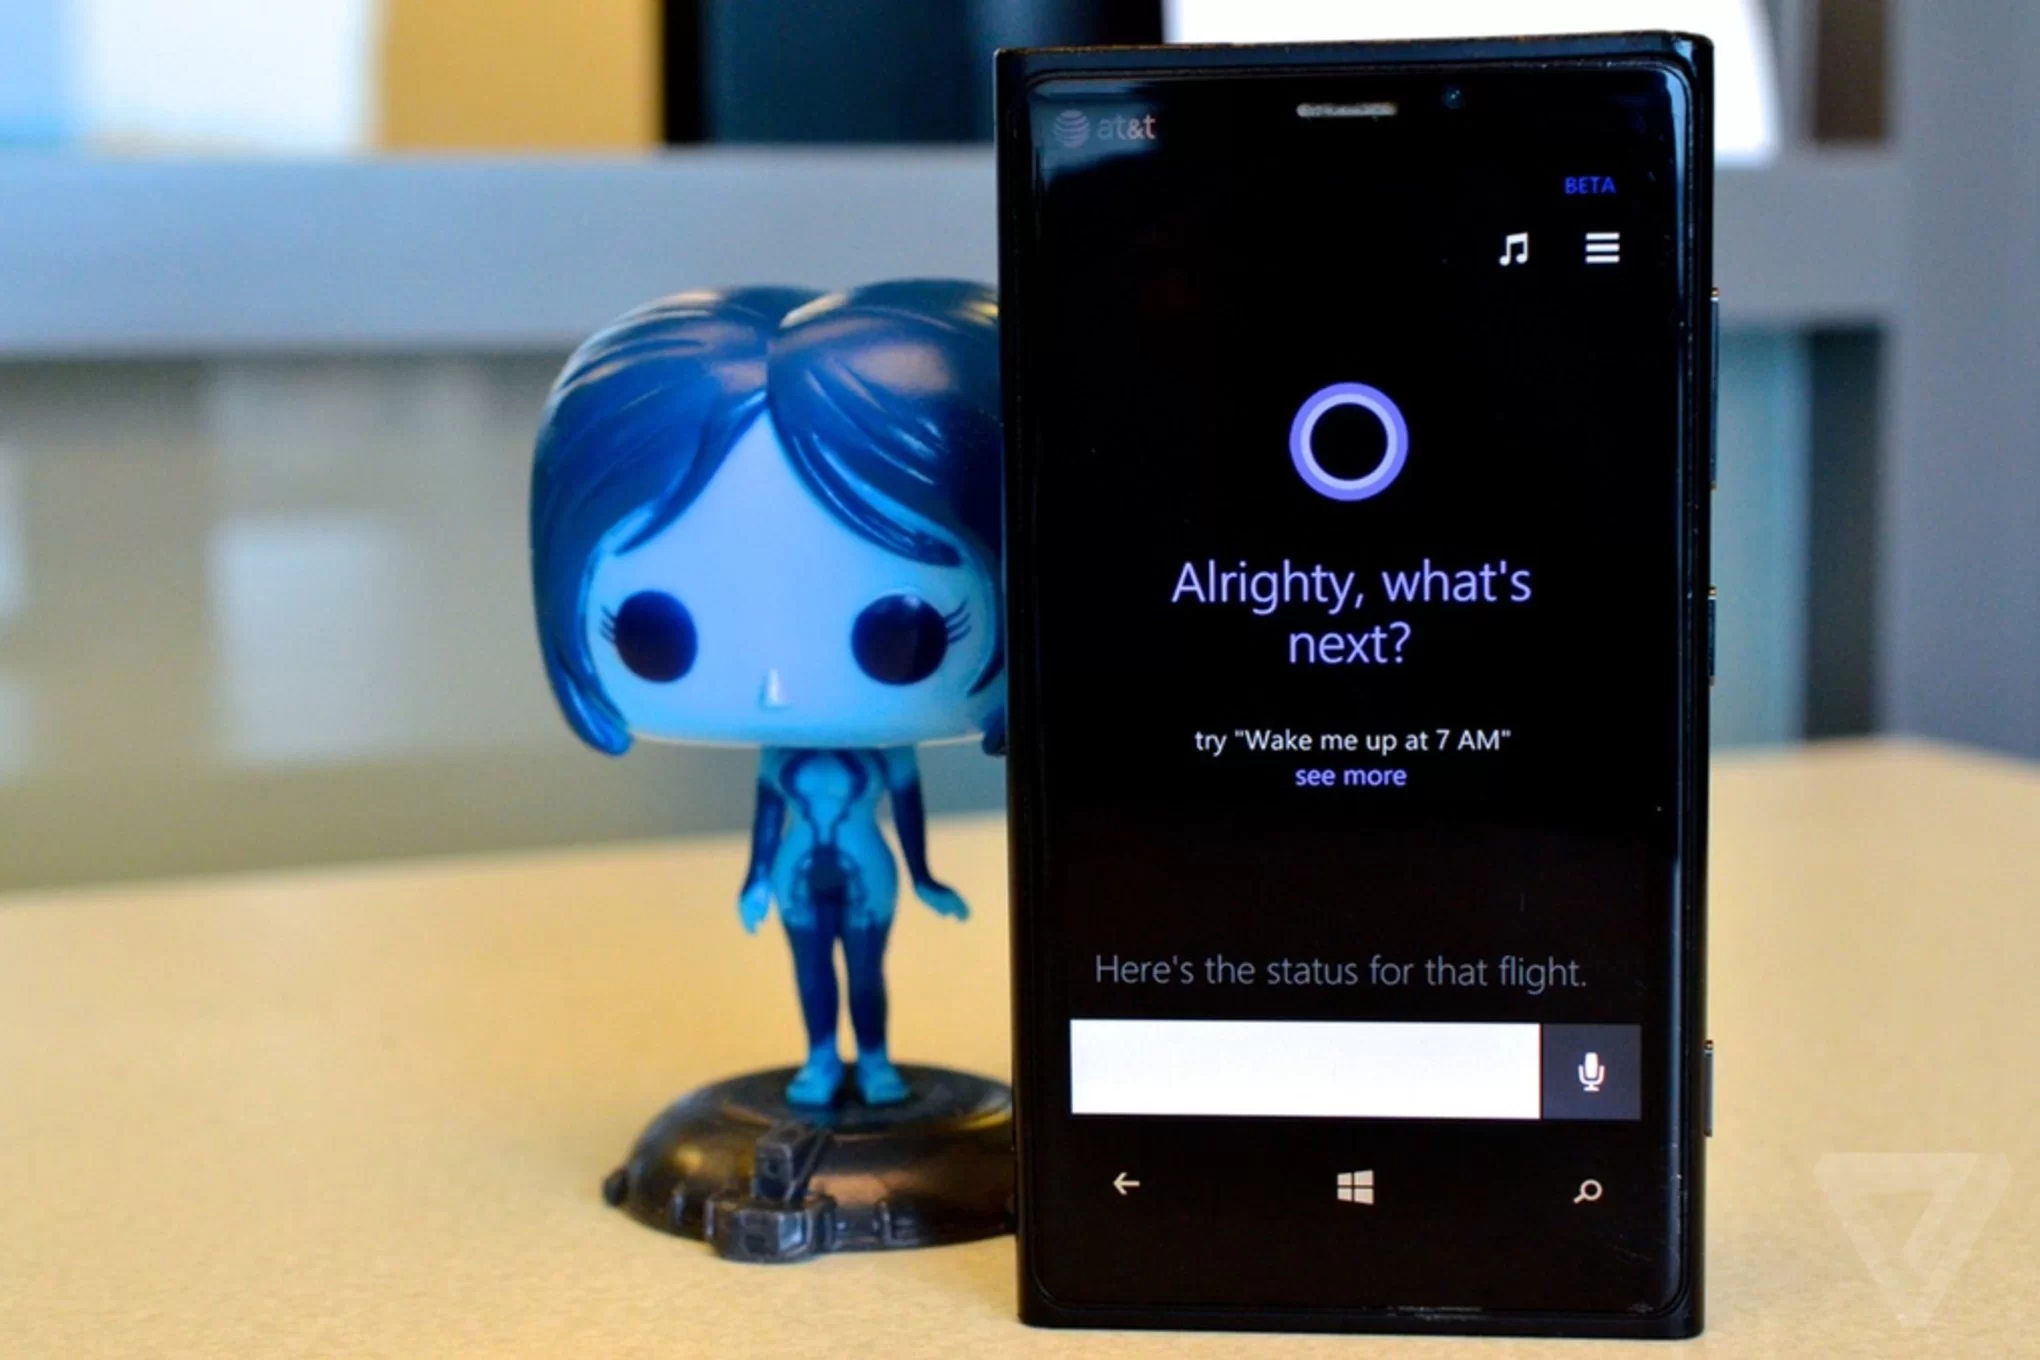 cortana windows phone toy theverge 1 1020.0 standard 2040.0 | cortana | [ข่าว] Windows 10 จะสามารถเปลี่ยน Cortana ให้กลายเป็นผู้ชายได้